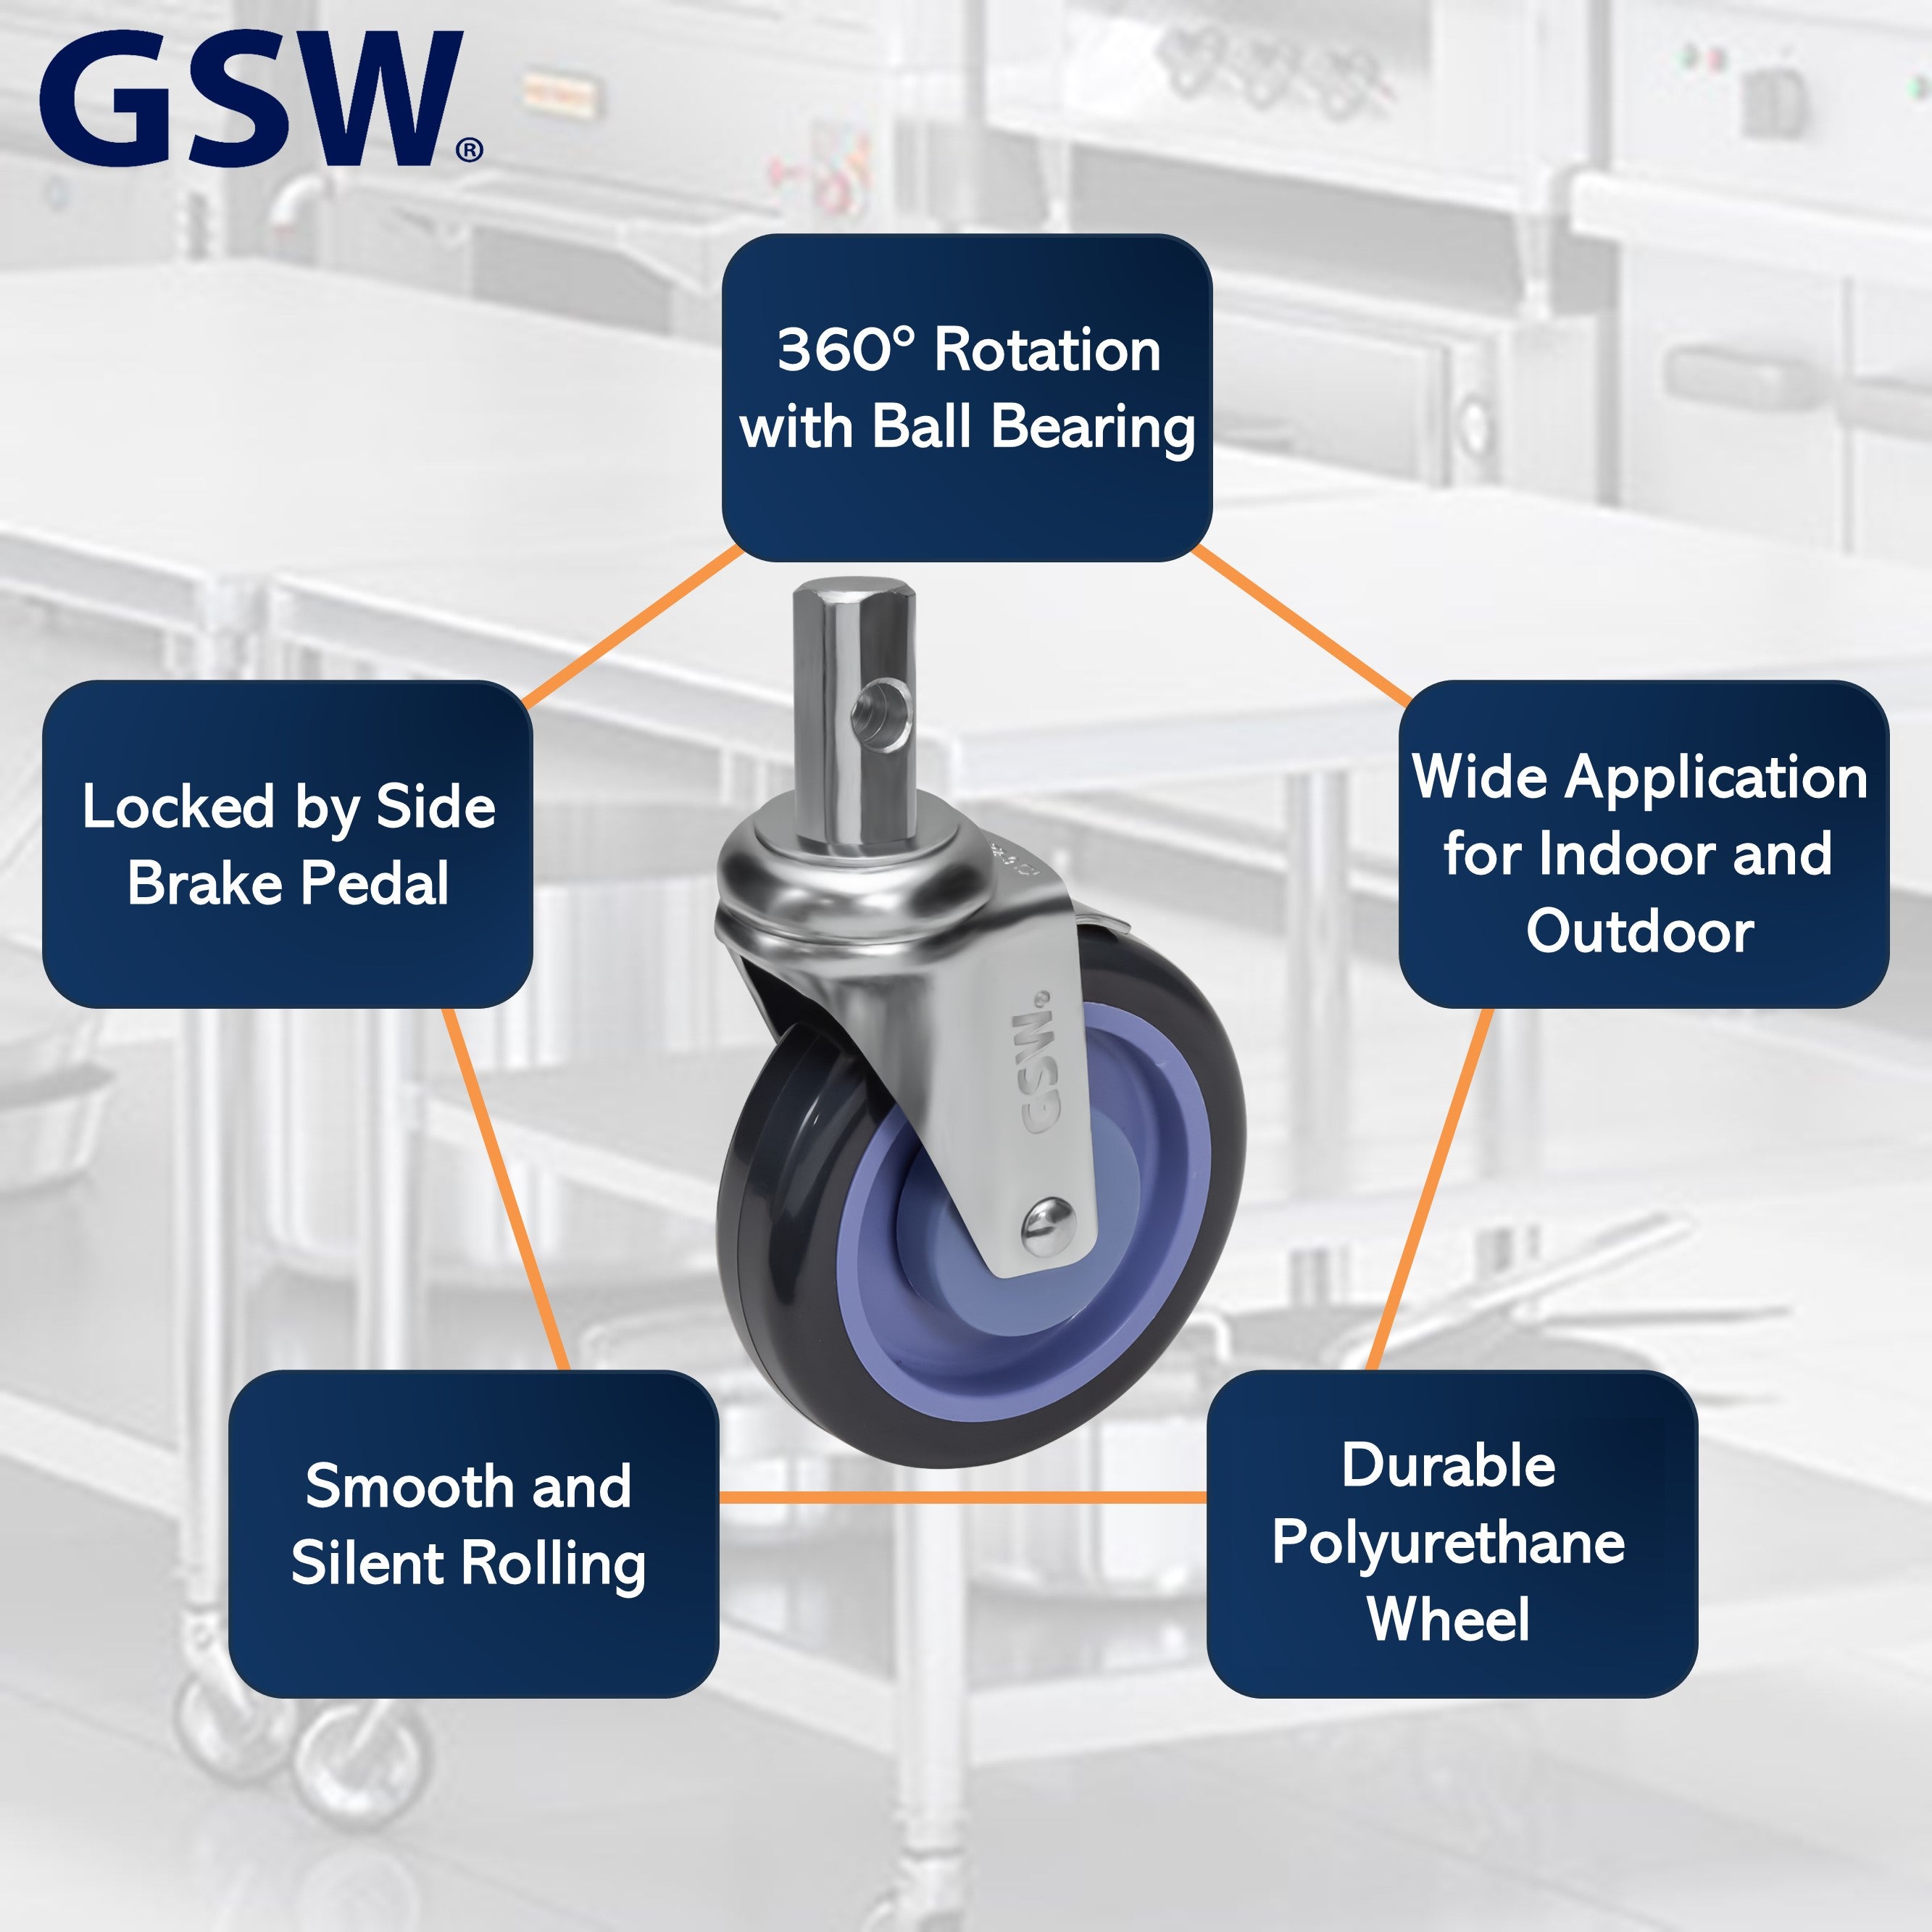 GSW 5" Caster Wheels, Polyurethane Stem Casters - Heavy Duty Set of 4 for Food Storage Racks, GSW Pan Racks.